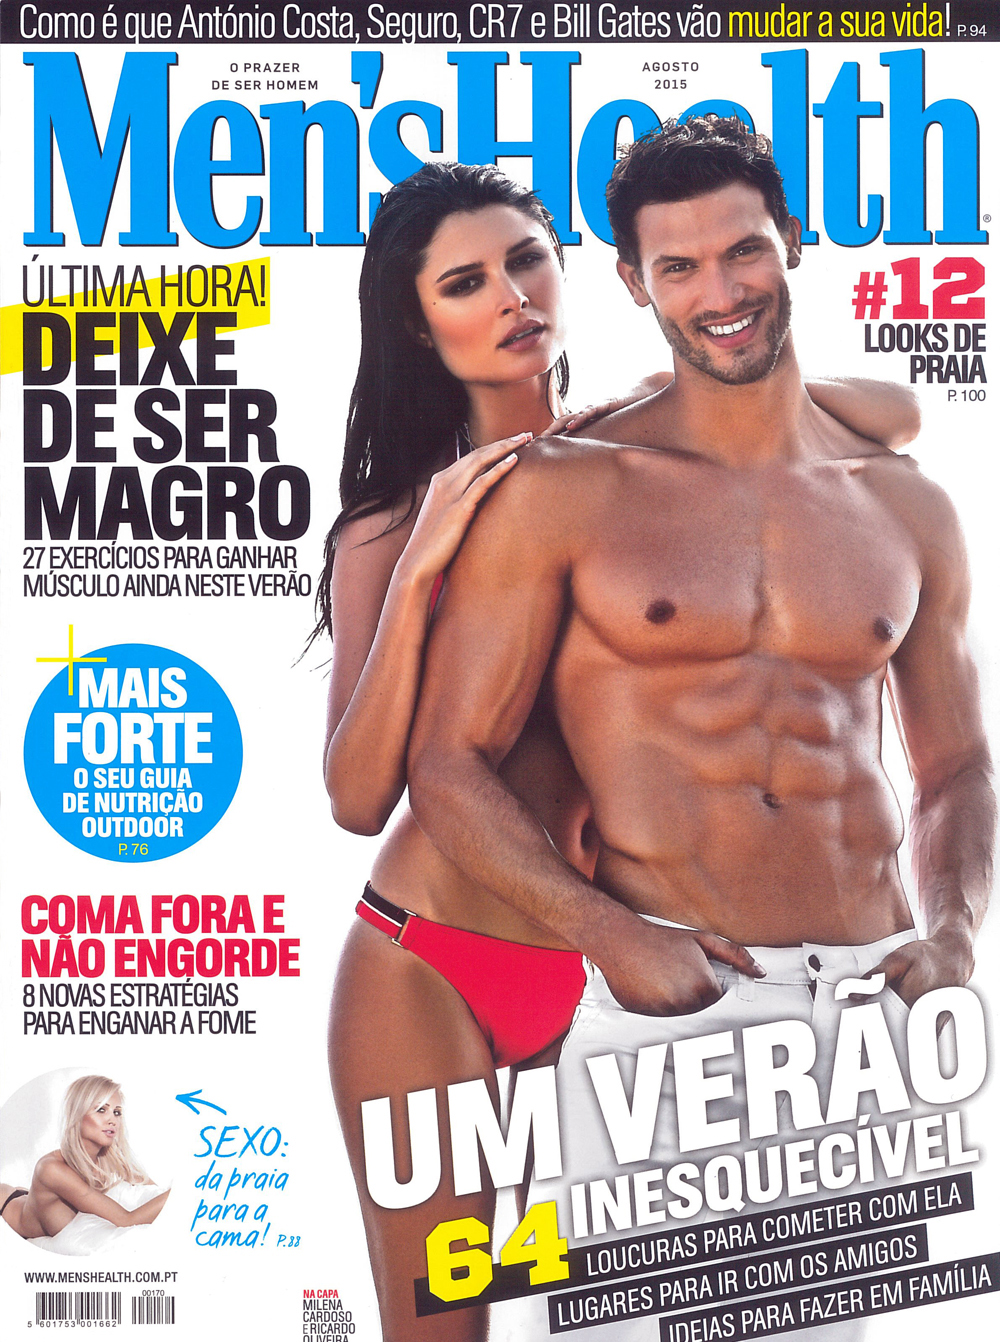 Mens Health Portugal August 2015 Cover Shoot Ricardo Oliveira 001